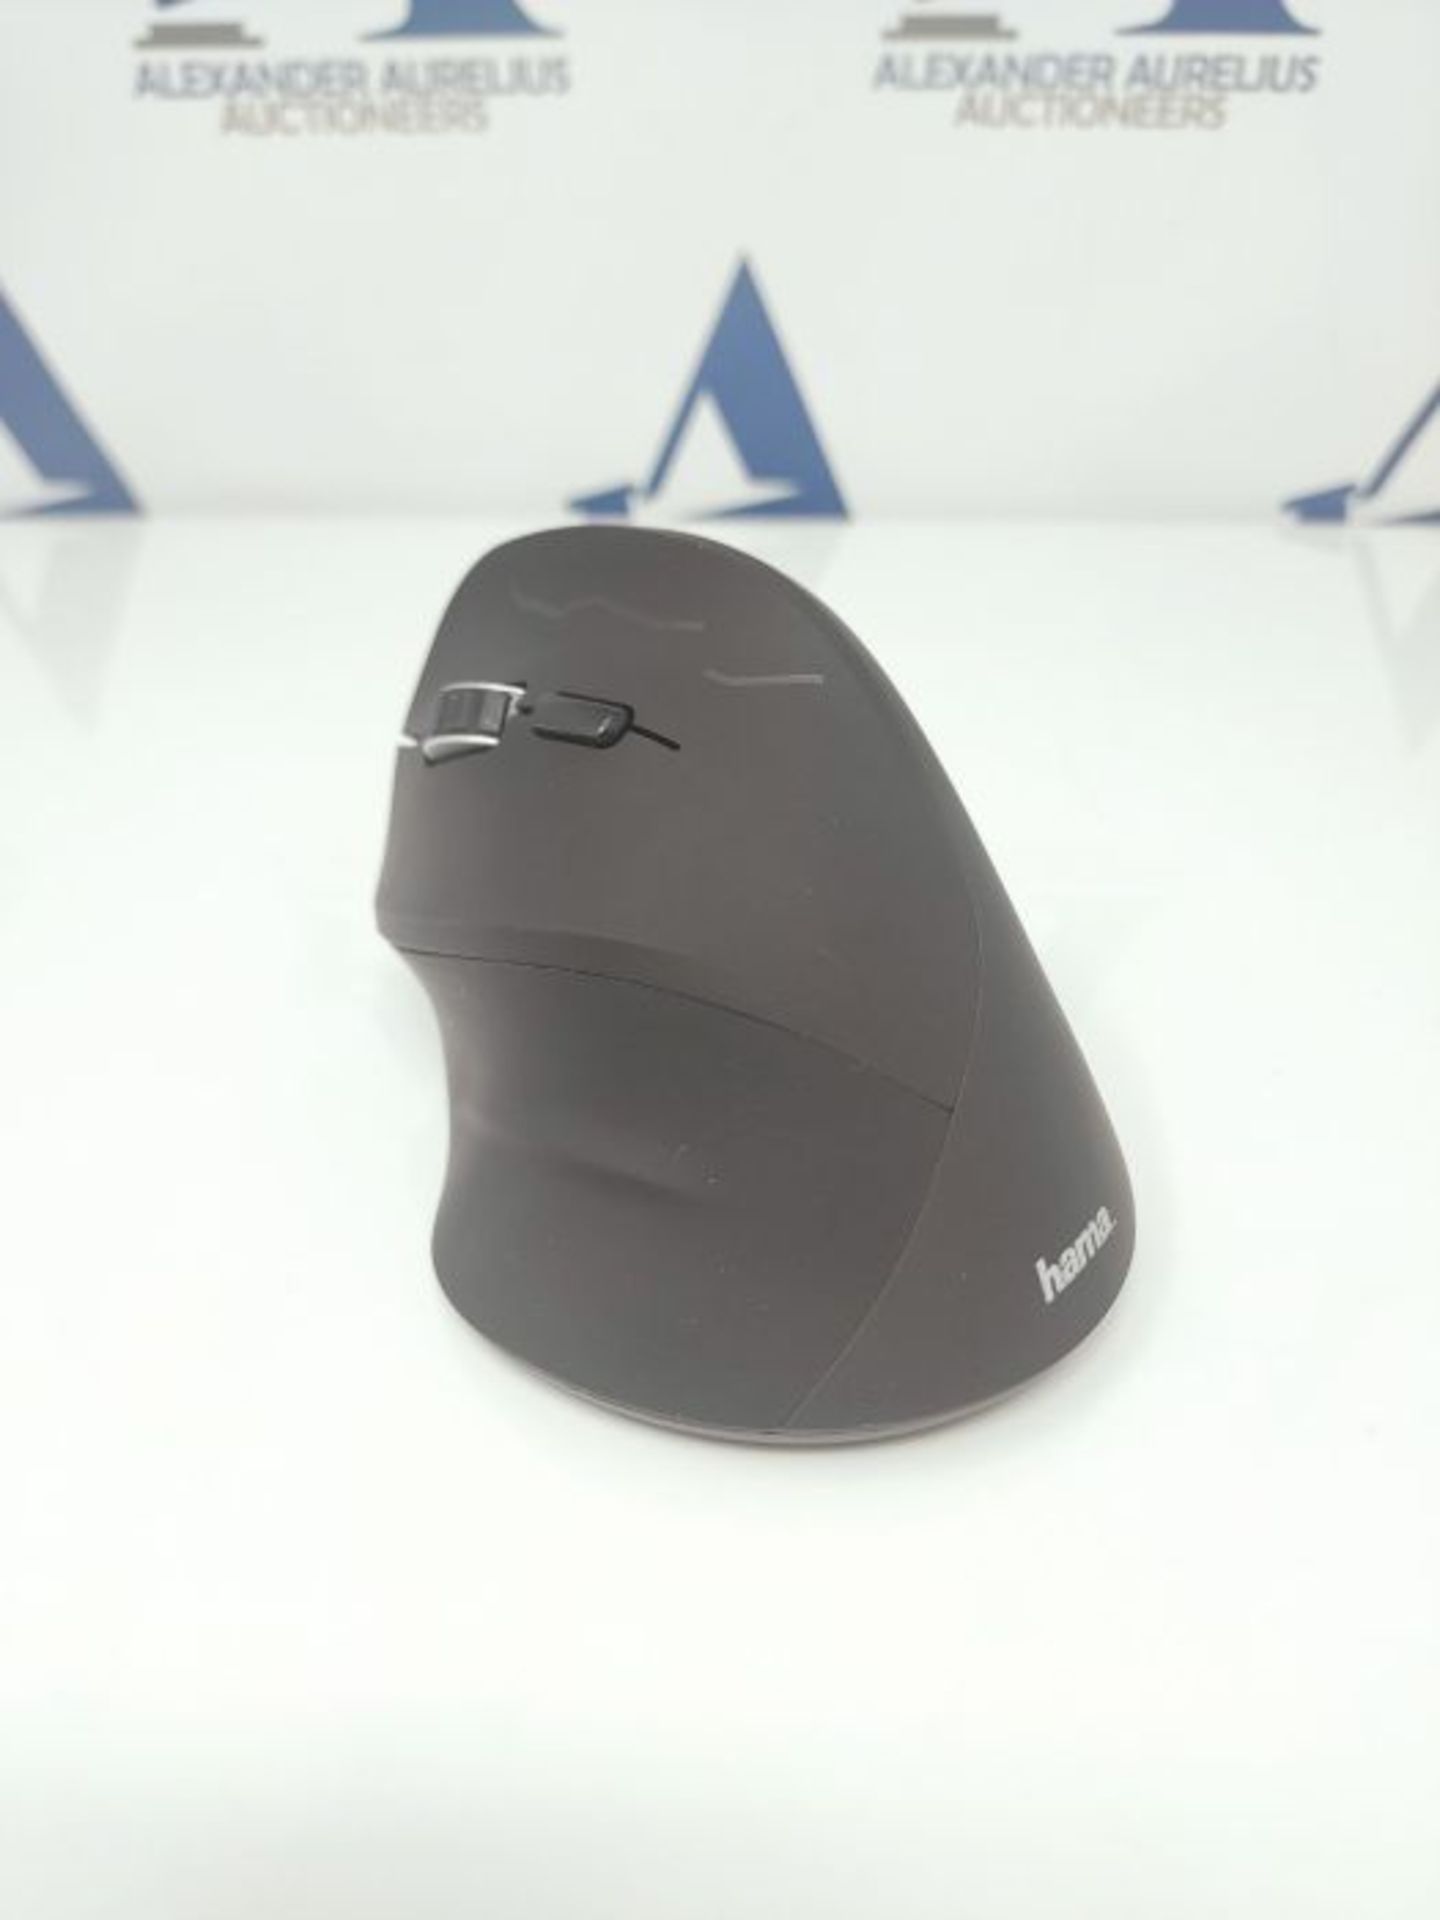 Hama Vertical, Ergonomic EMW-500L Left-handed Mouse | Wireless | Black - Image 3 of 3